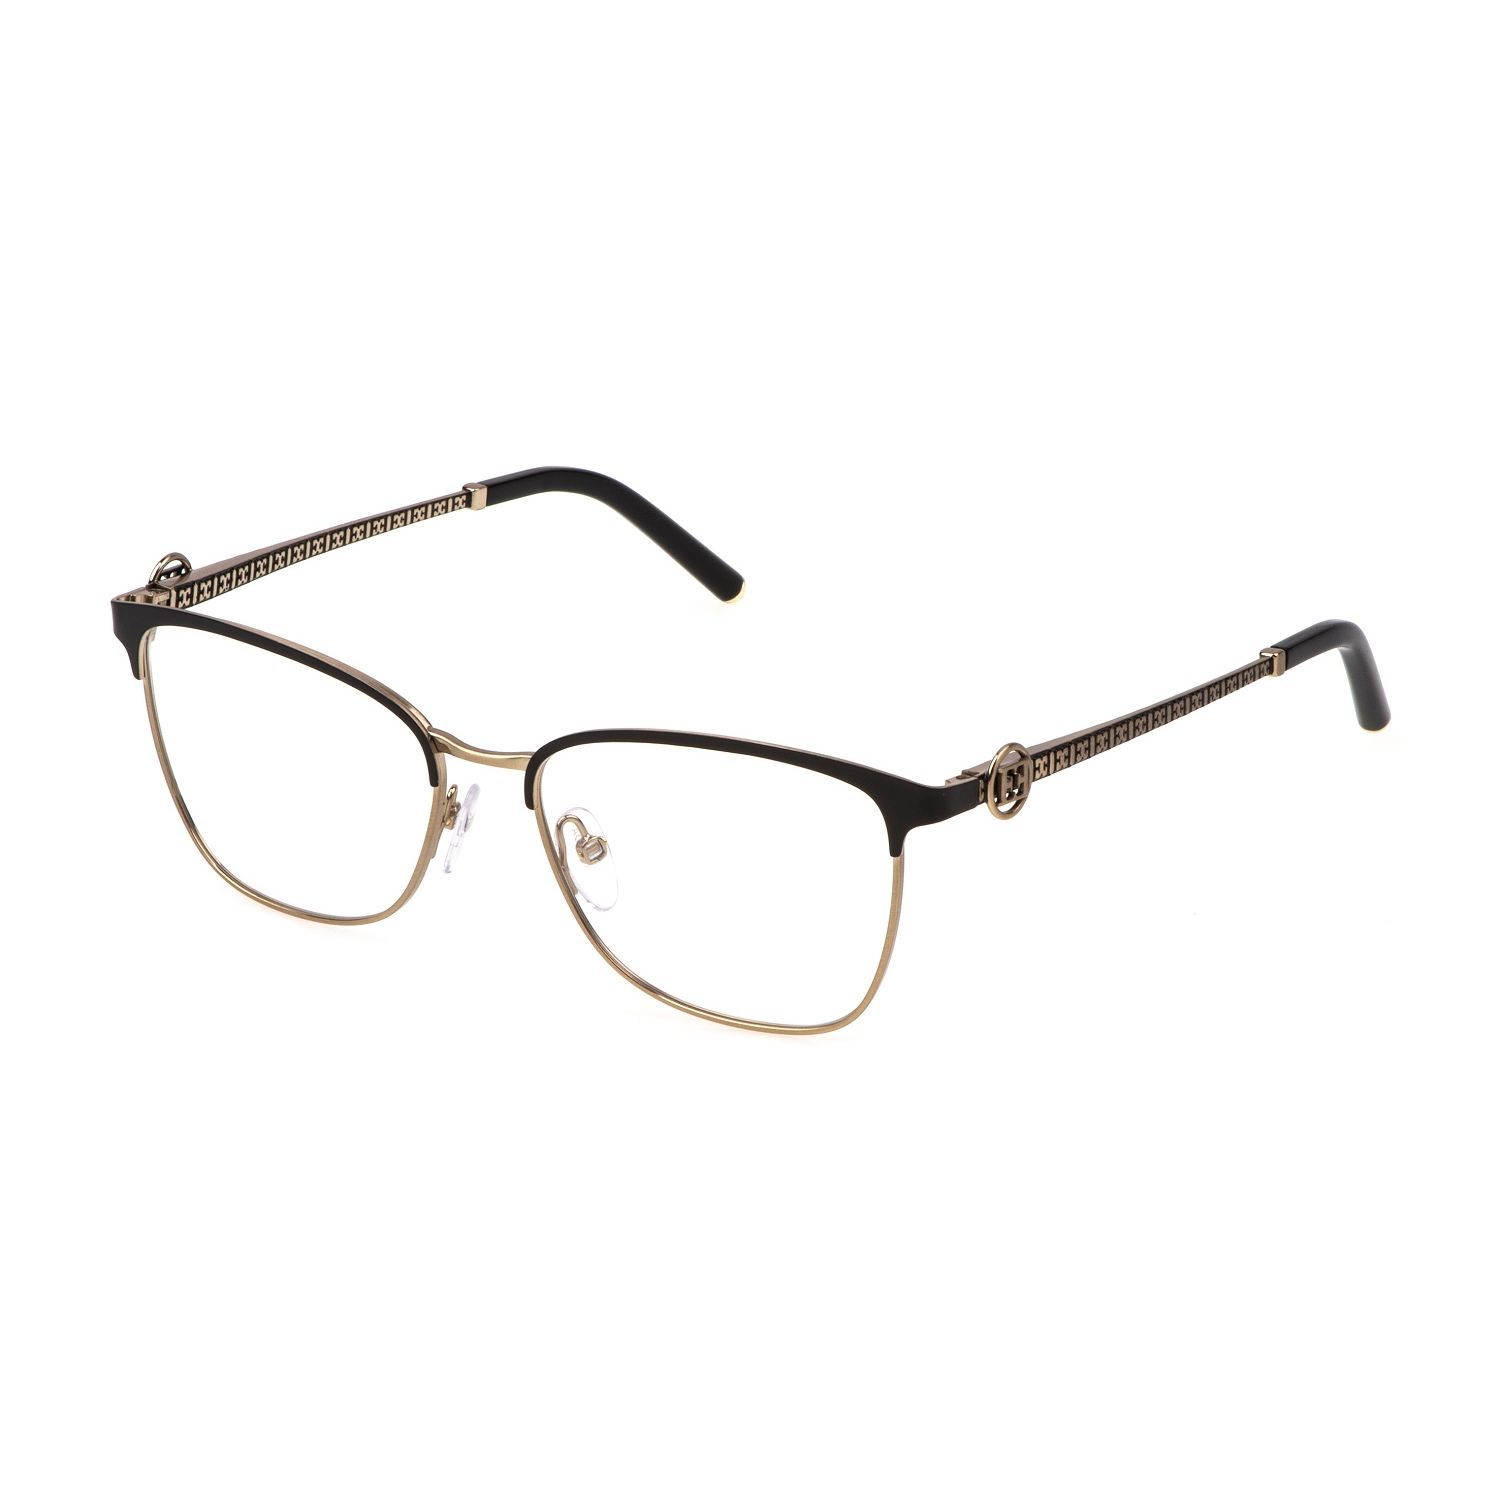 VESE32 Square Eyeglasses 0H22 - size 53